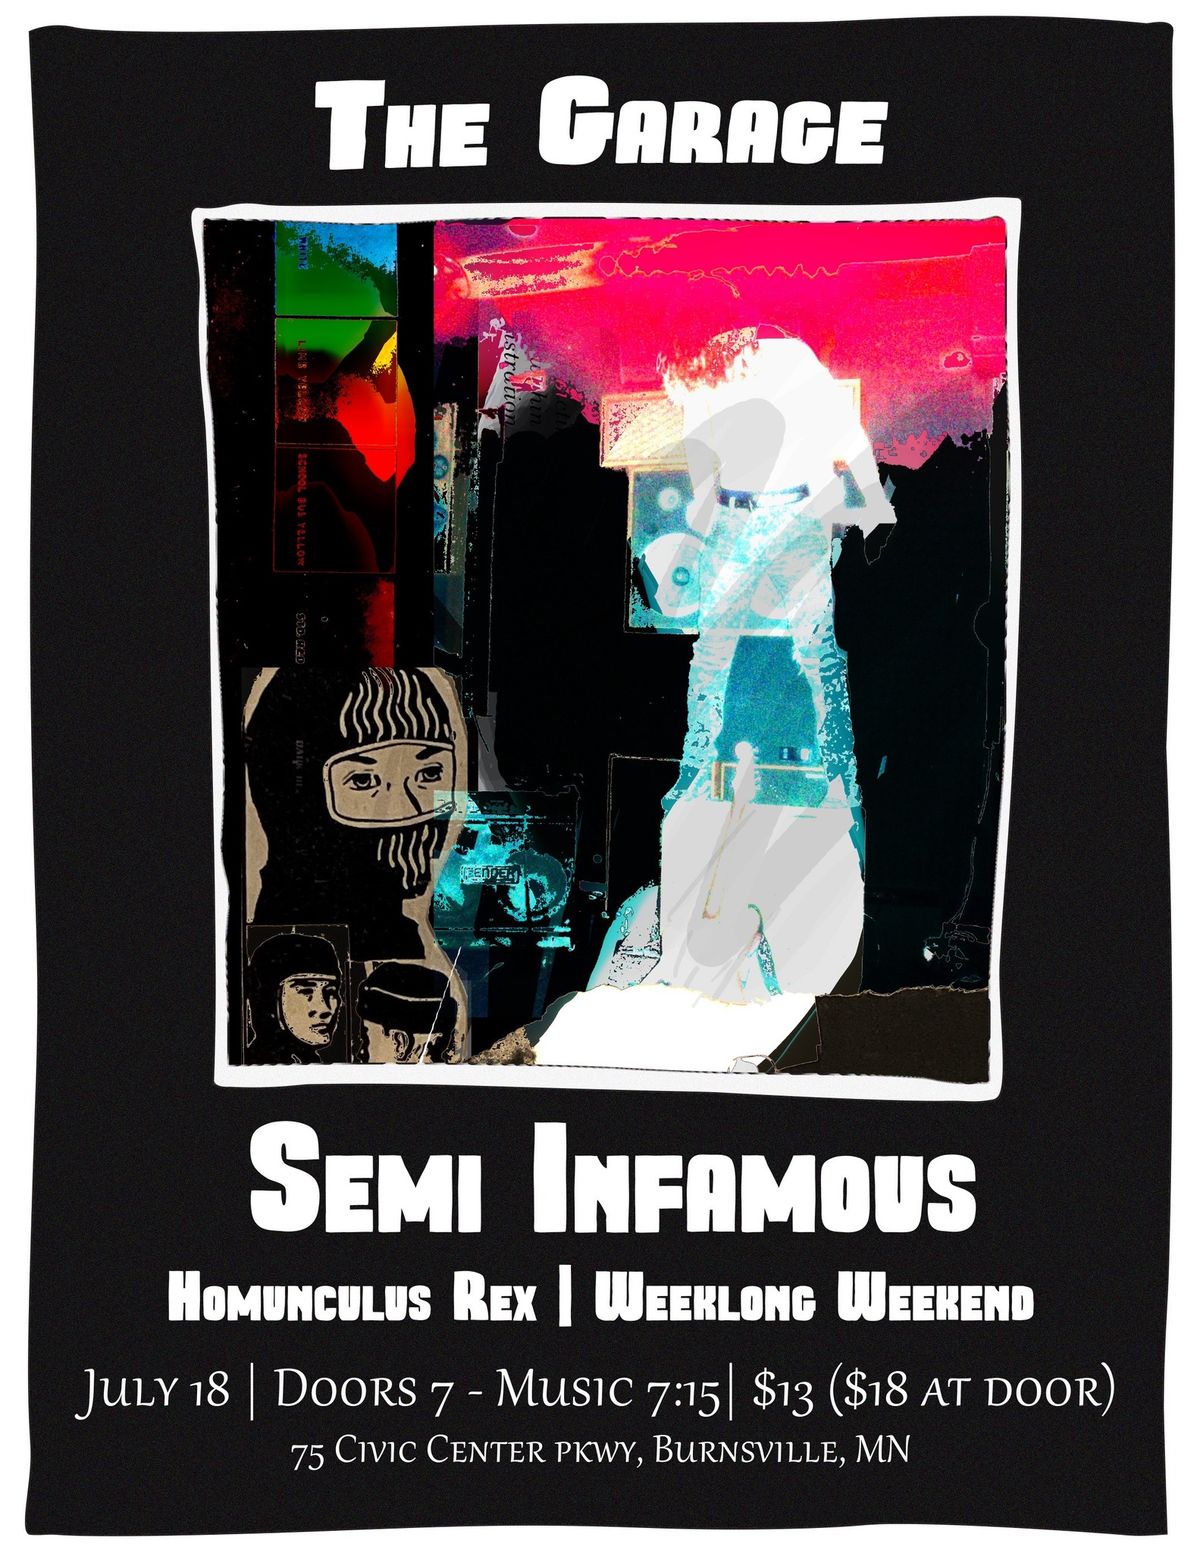 Semi Infamous, Homunculus Rex and Weeklong Weekend at The Garage!